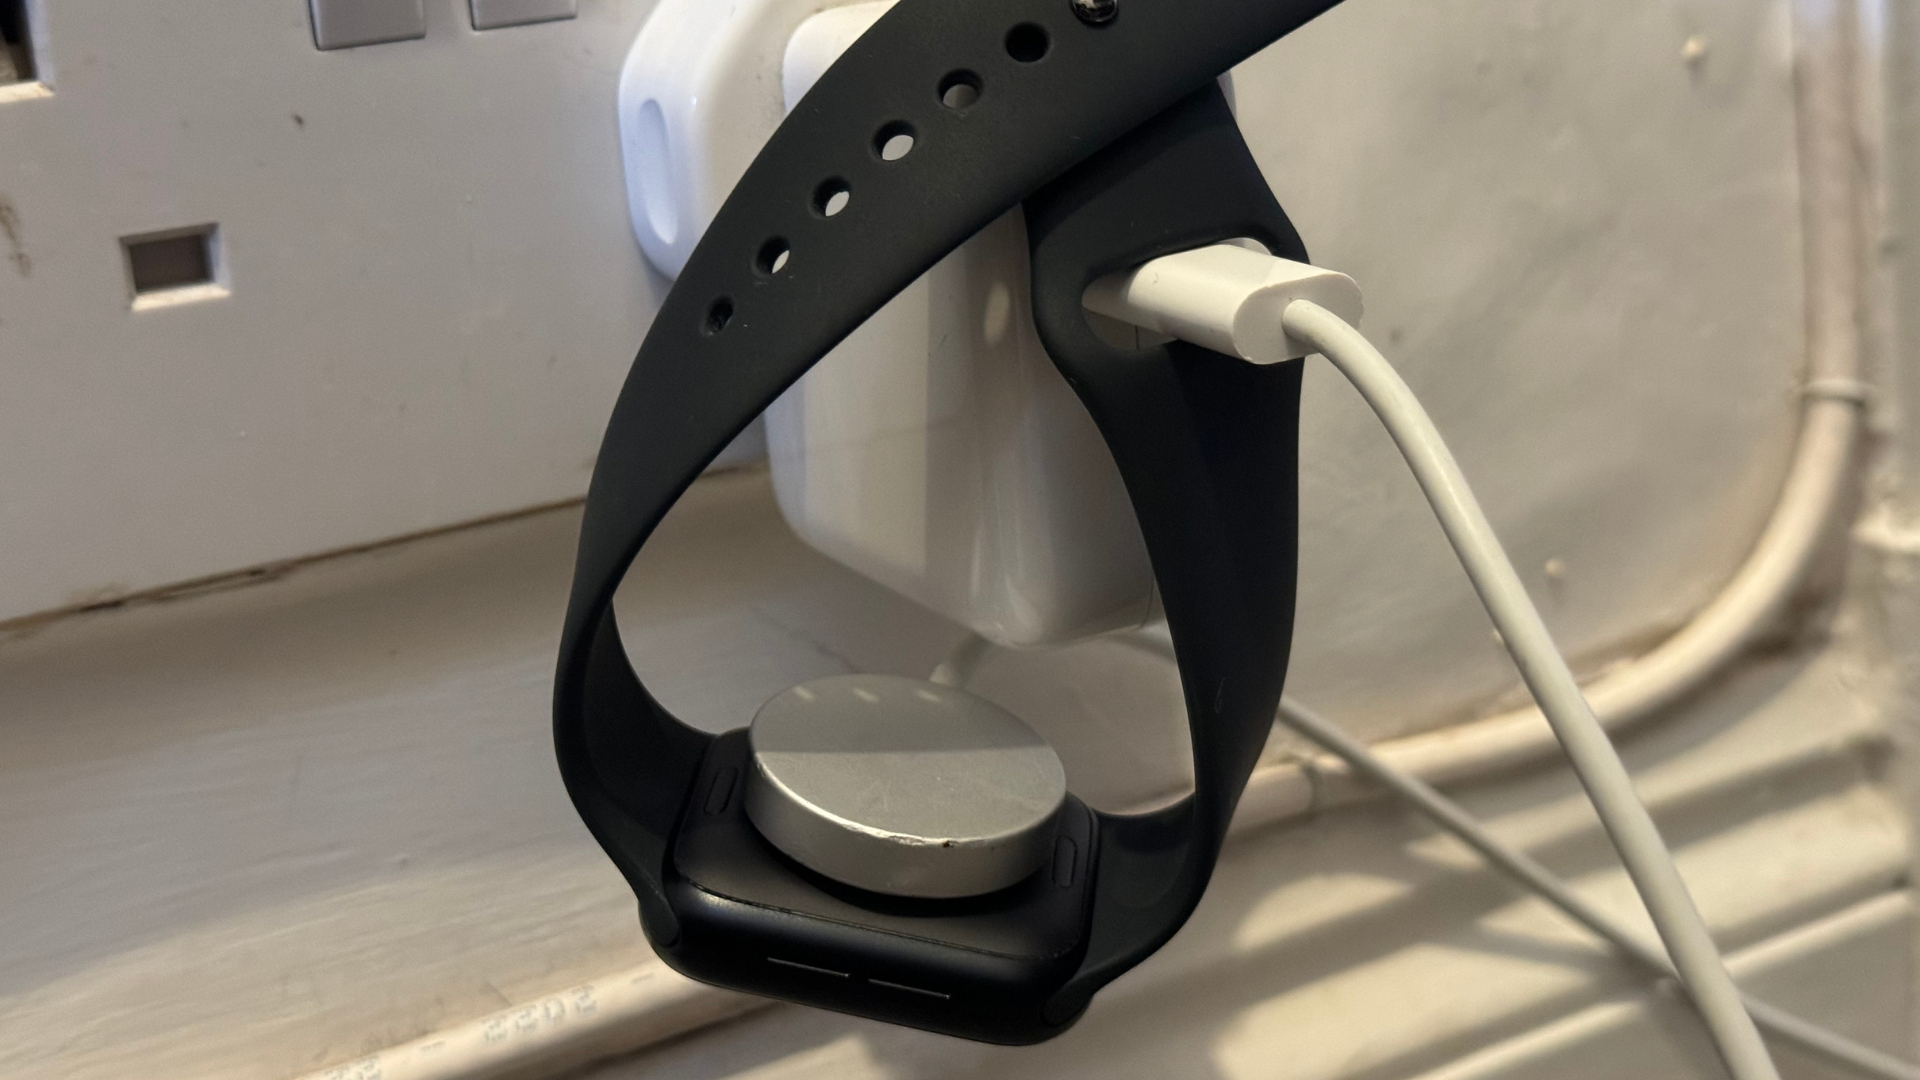 Apple Watch charging tip